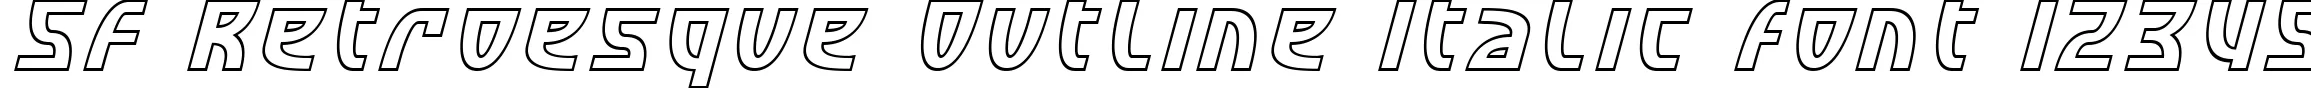 Dynamic SF Retroesque Outline Italic Font Preview https://safirsoft.com